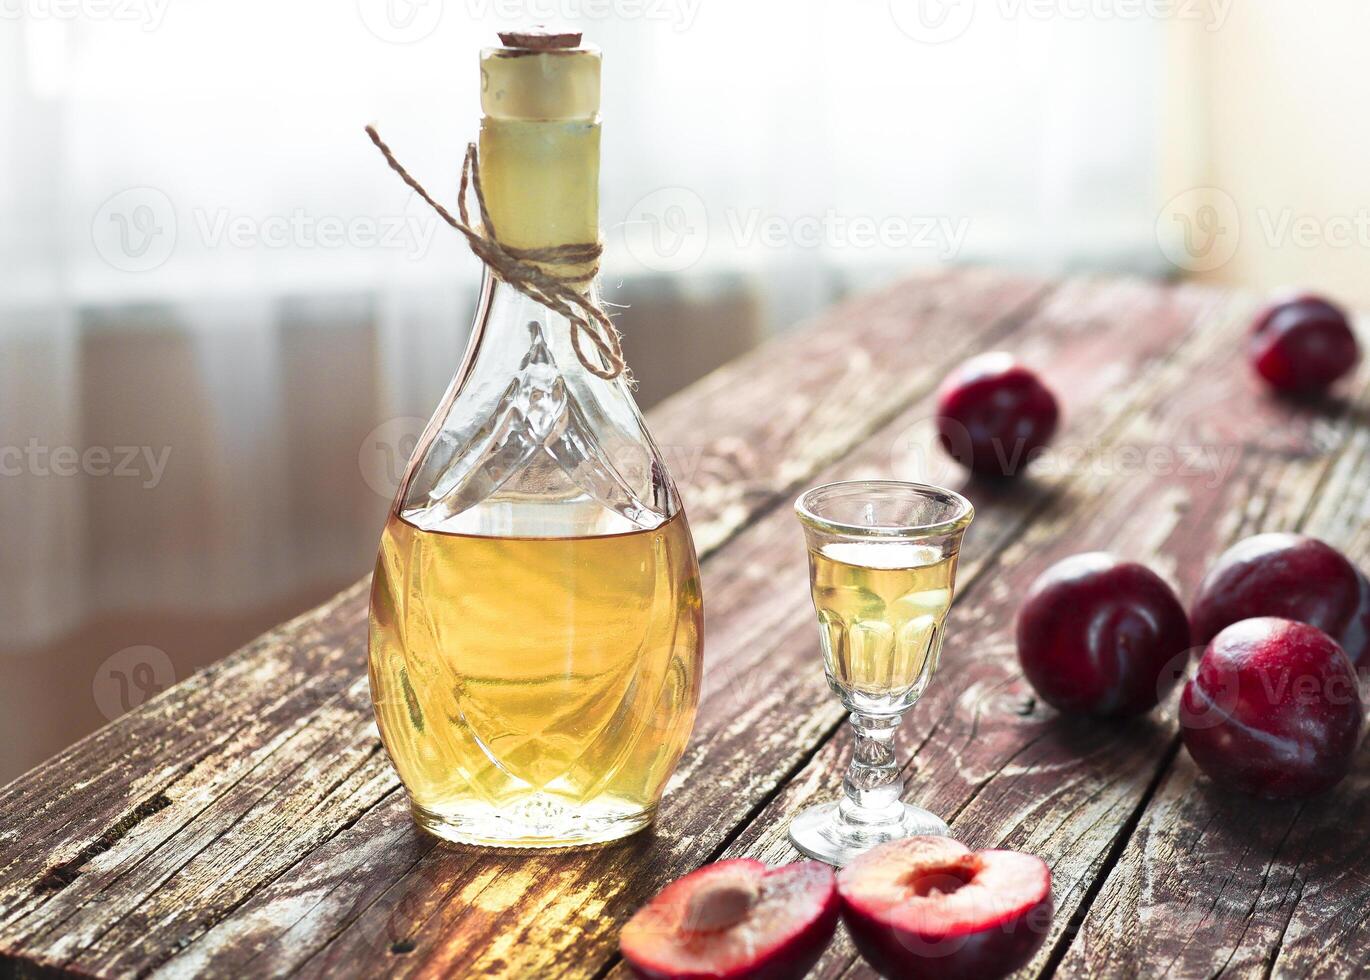 traditionnel balkanique prune Cognac - slivovica photo